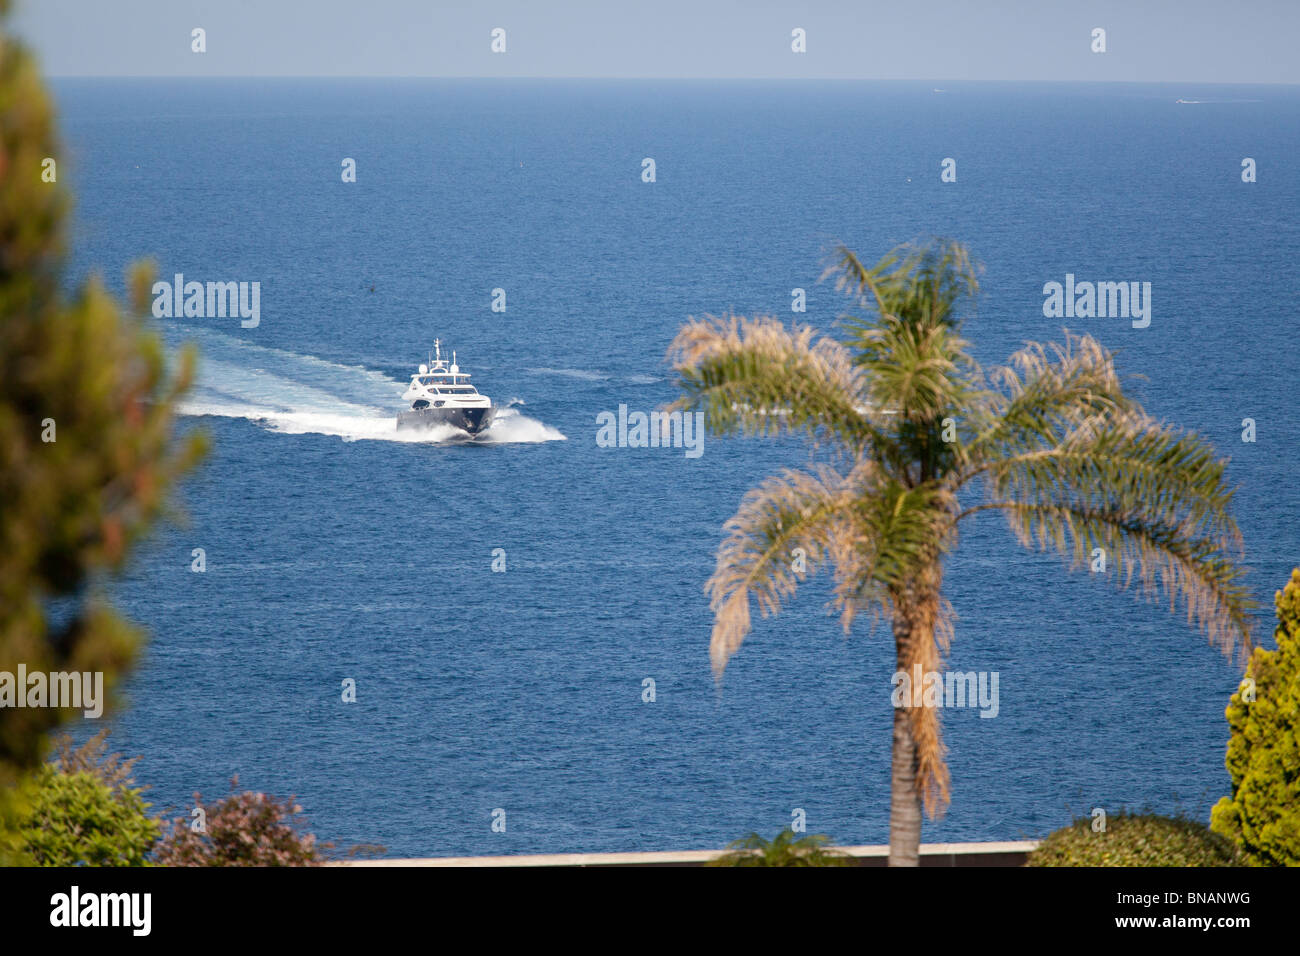 A luxury yacht heading in towards a palm tree lined shoreline Stock Photo